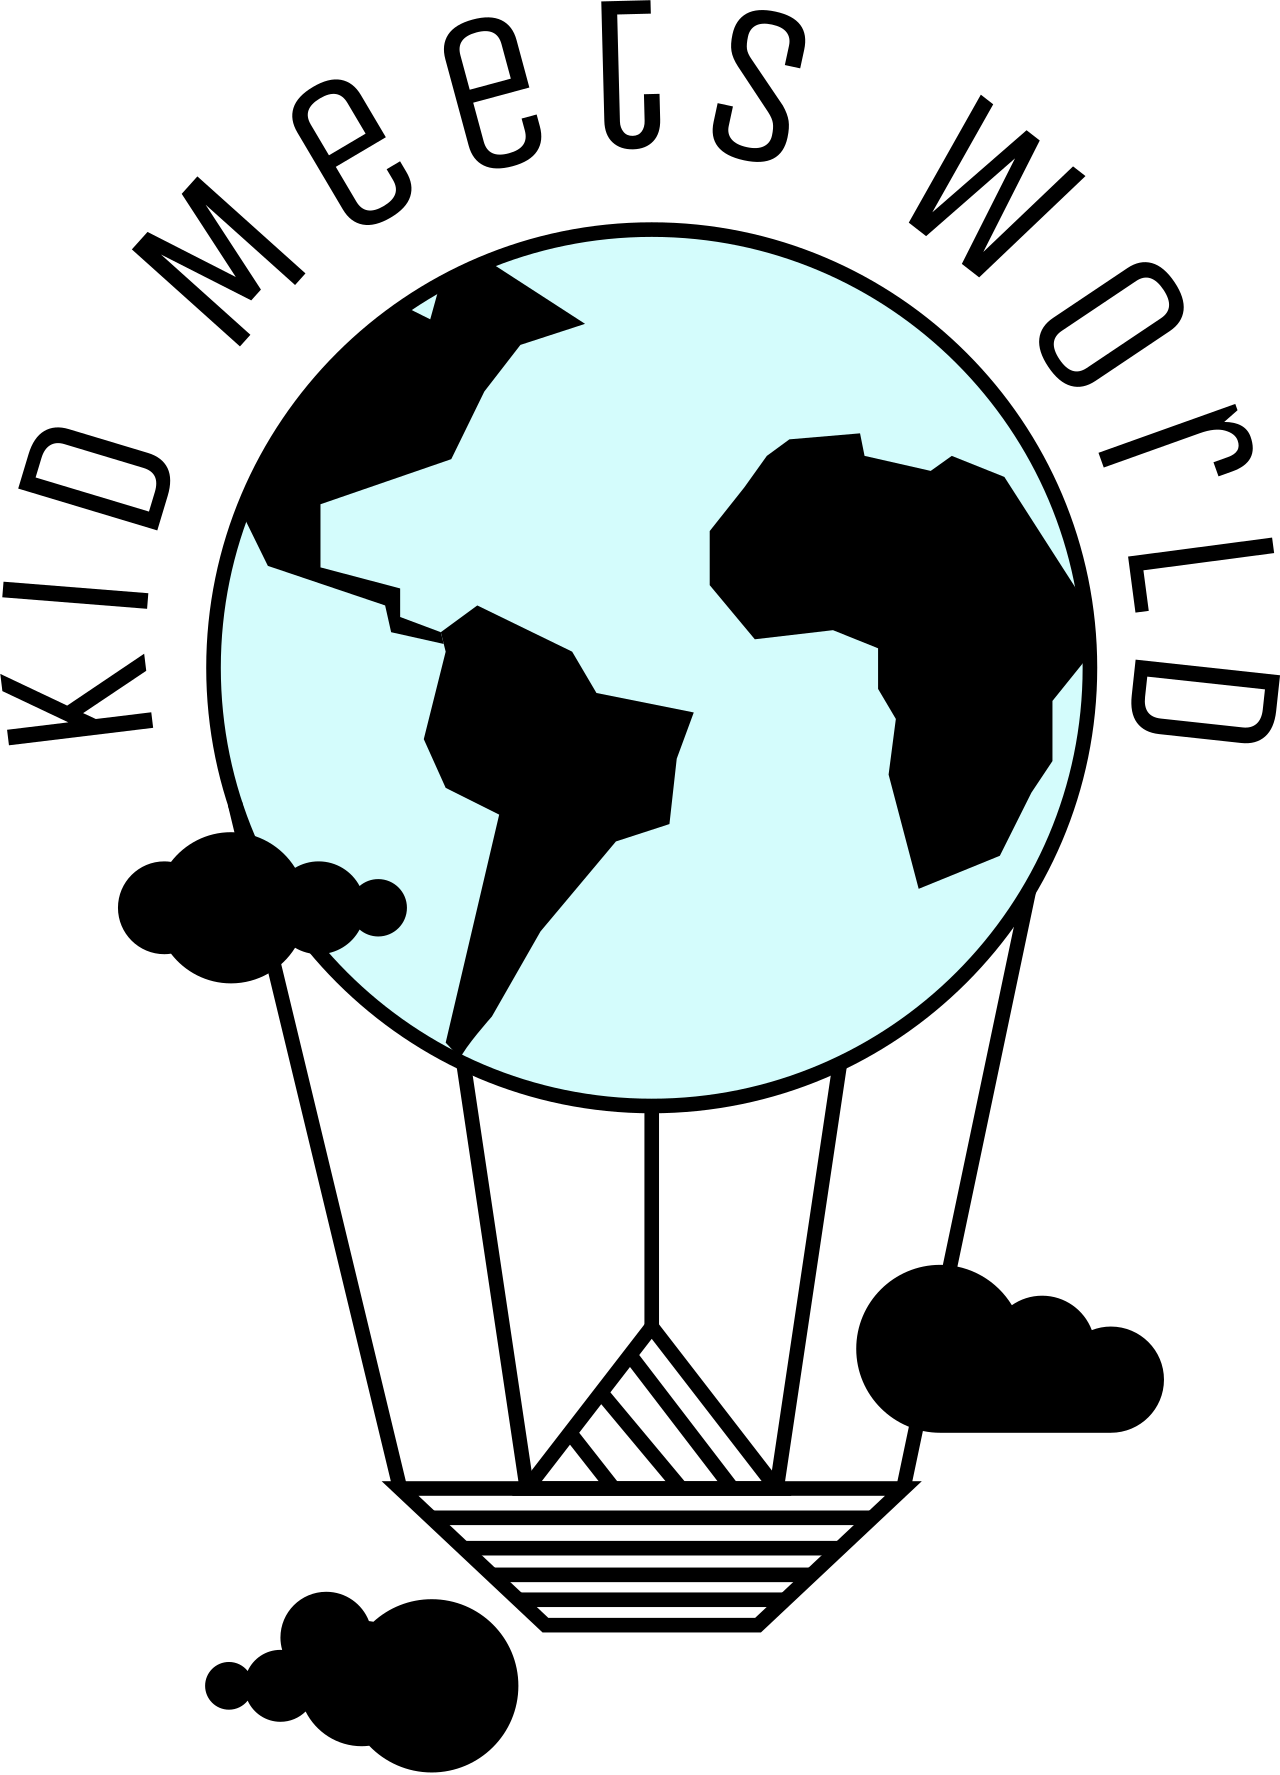 Kid Meets World's logo